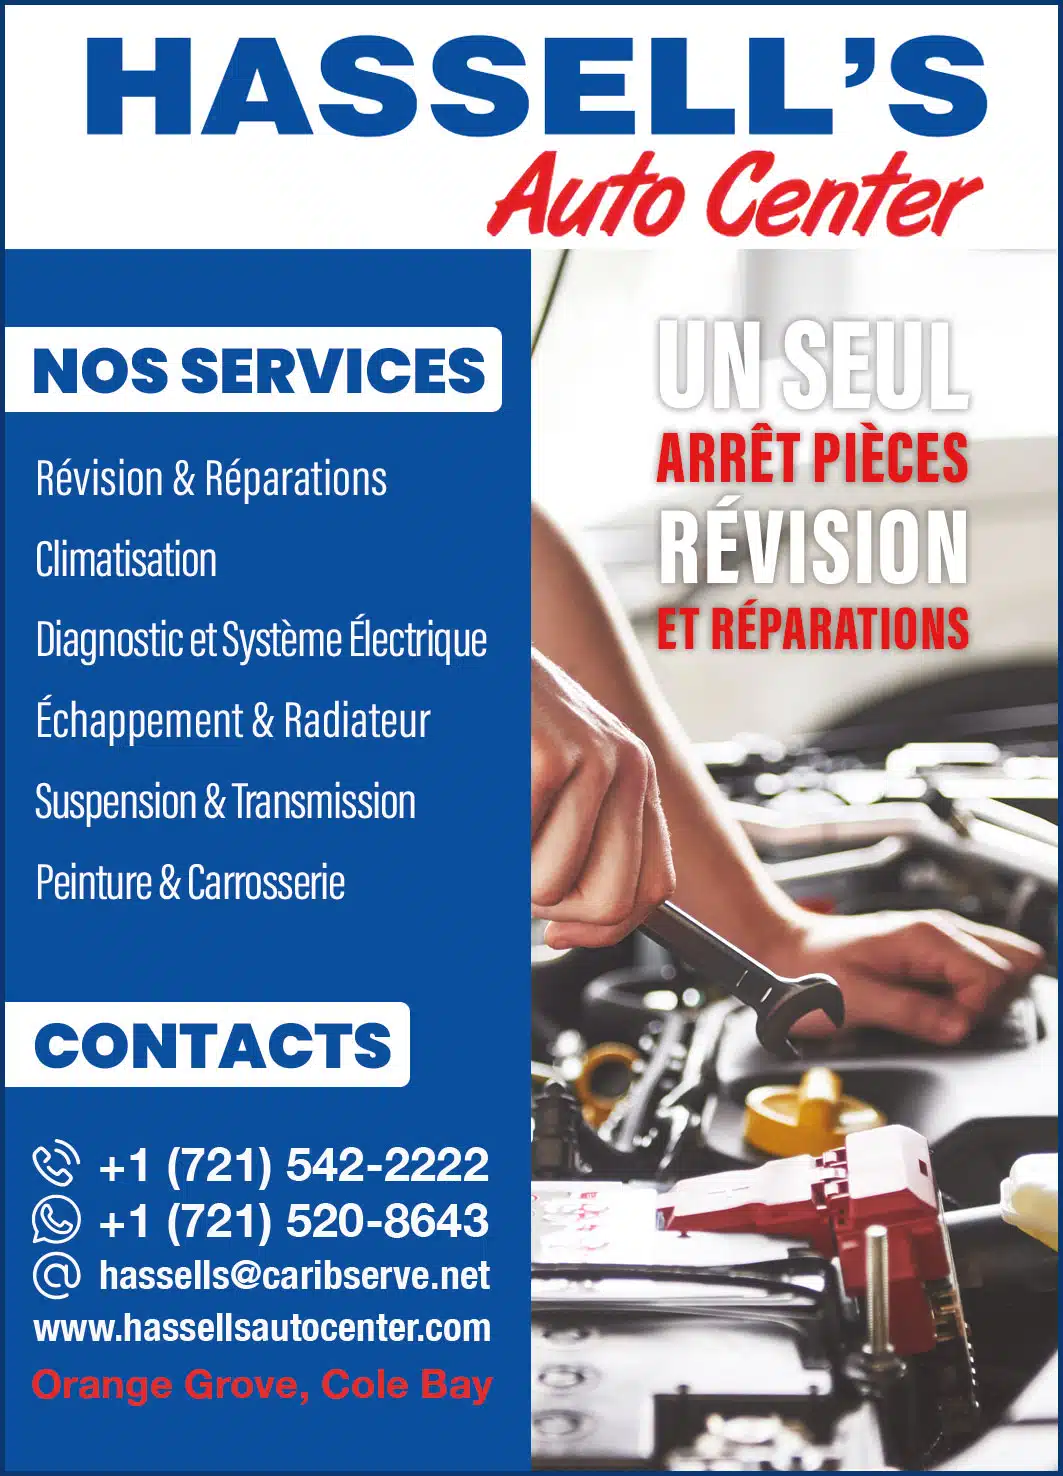 St Maarten Telephone Directory - Hassell's Auto Center